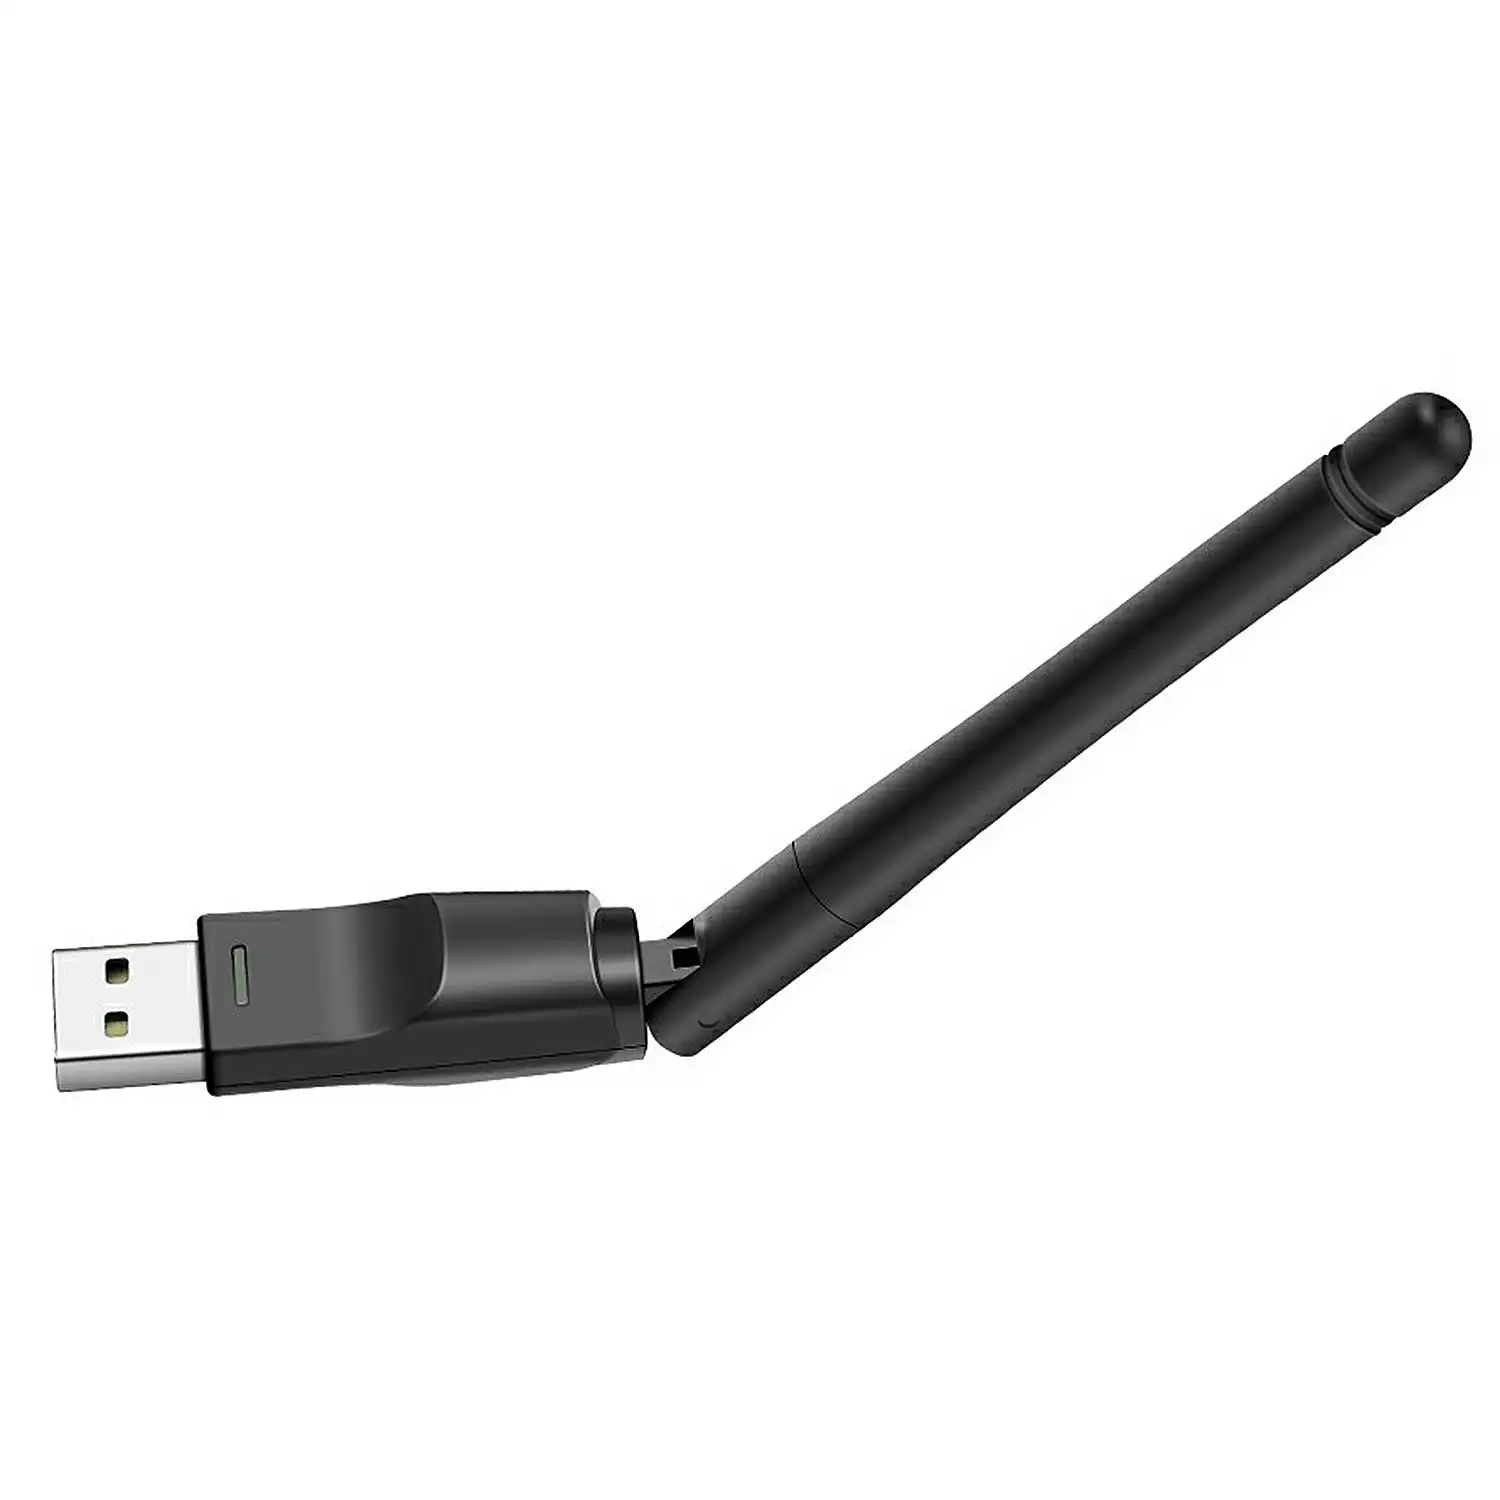 2 In 1 WiFi Bluetooth Gaming USB Adapter 5Ghz Wireless Dongle USB 3.0 ricevitore WiFi scheda di rete per Windows 10 11